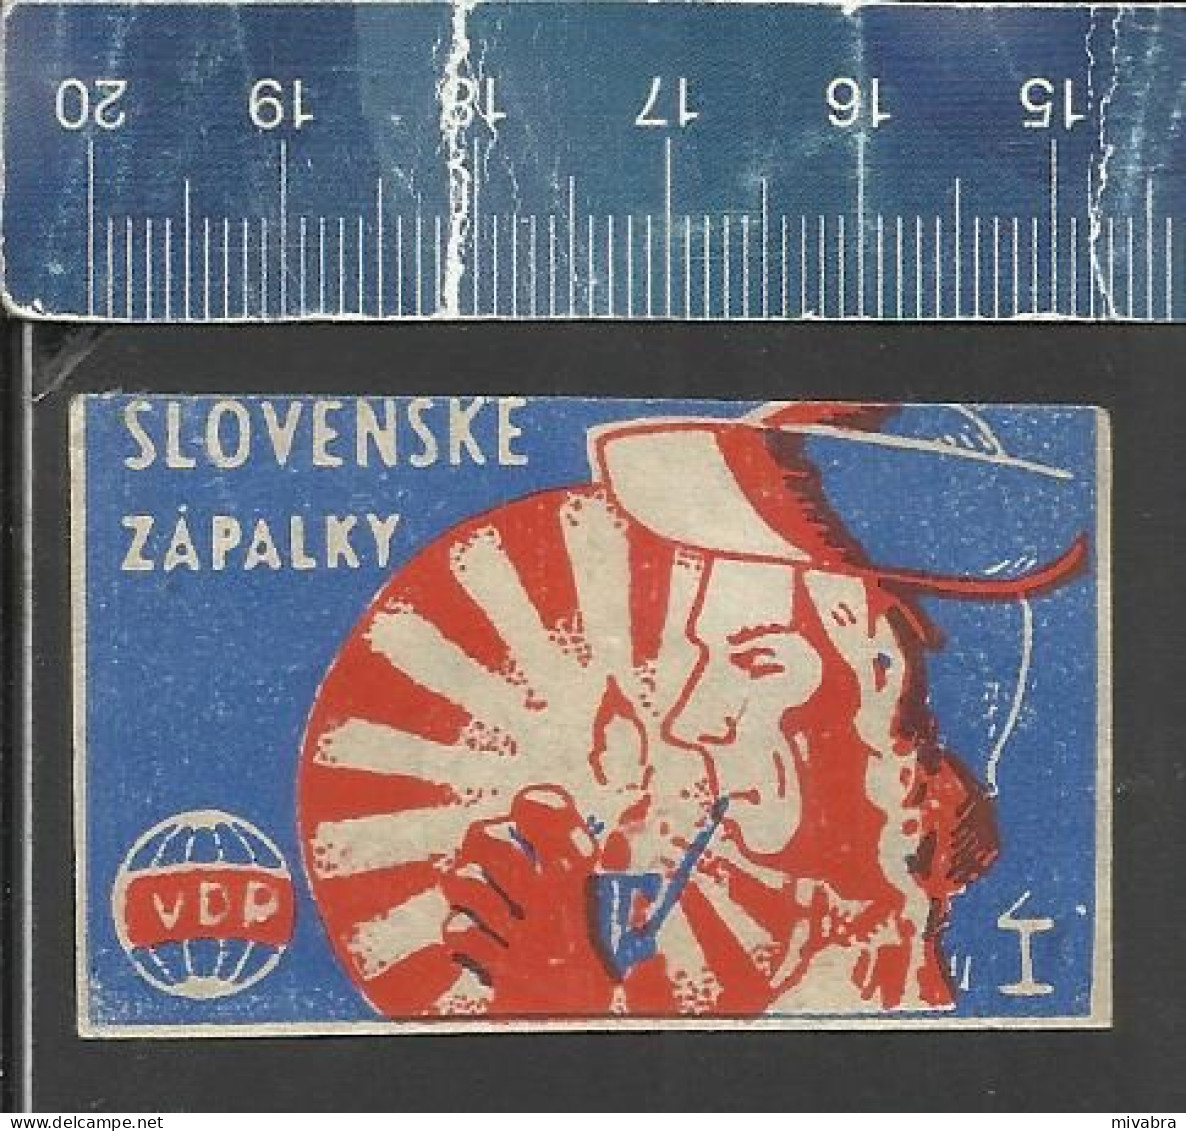 SLOVENSKE ZAPALKY VDP I ( MAN LICHTING A PIPE ) - OLD VINTAGE CZECHOSLOVAKIAN MATCHBOX LABEL - Boites D'allumettes - Etiquettes